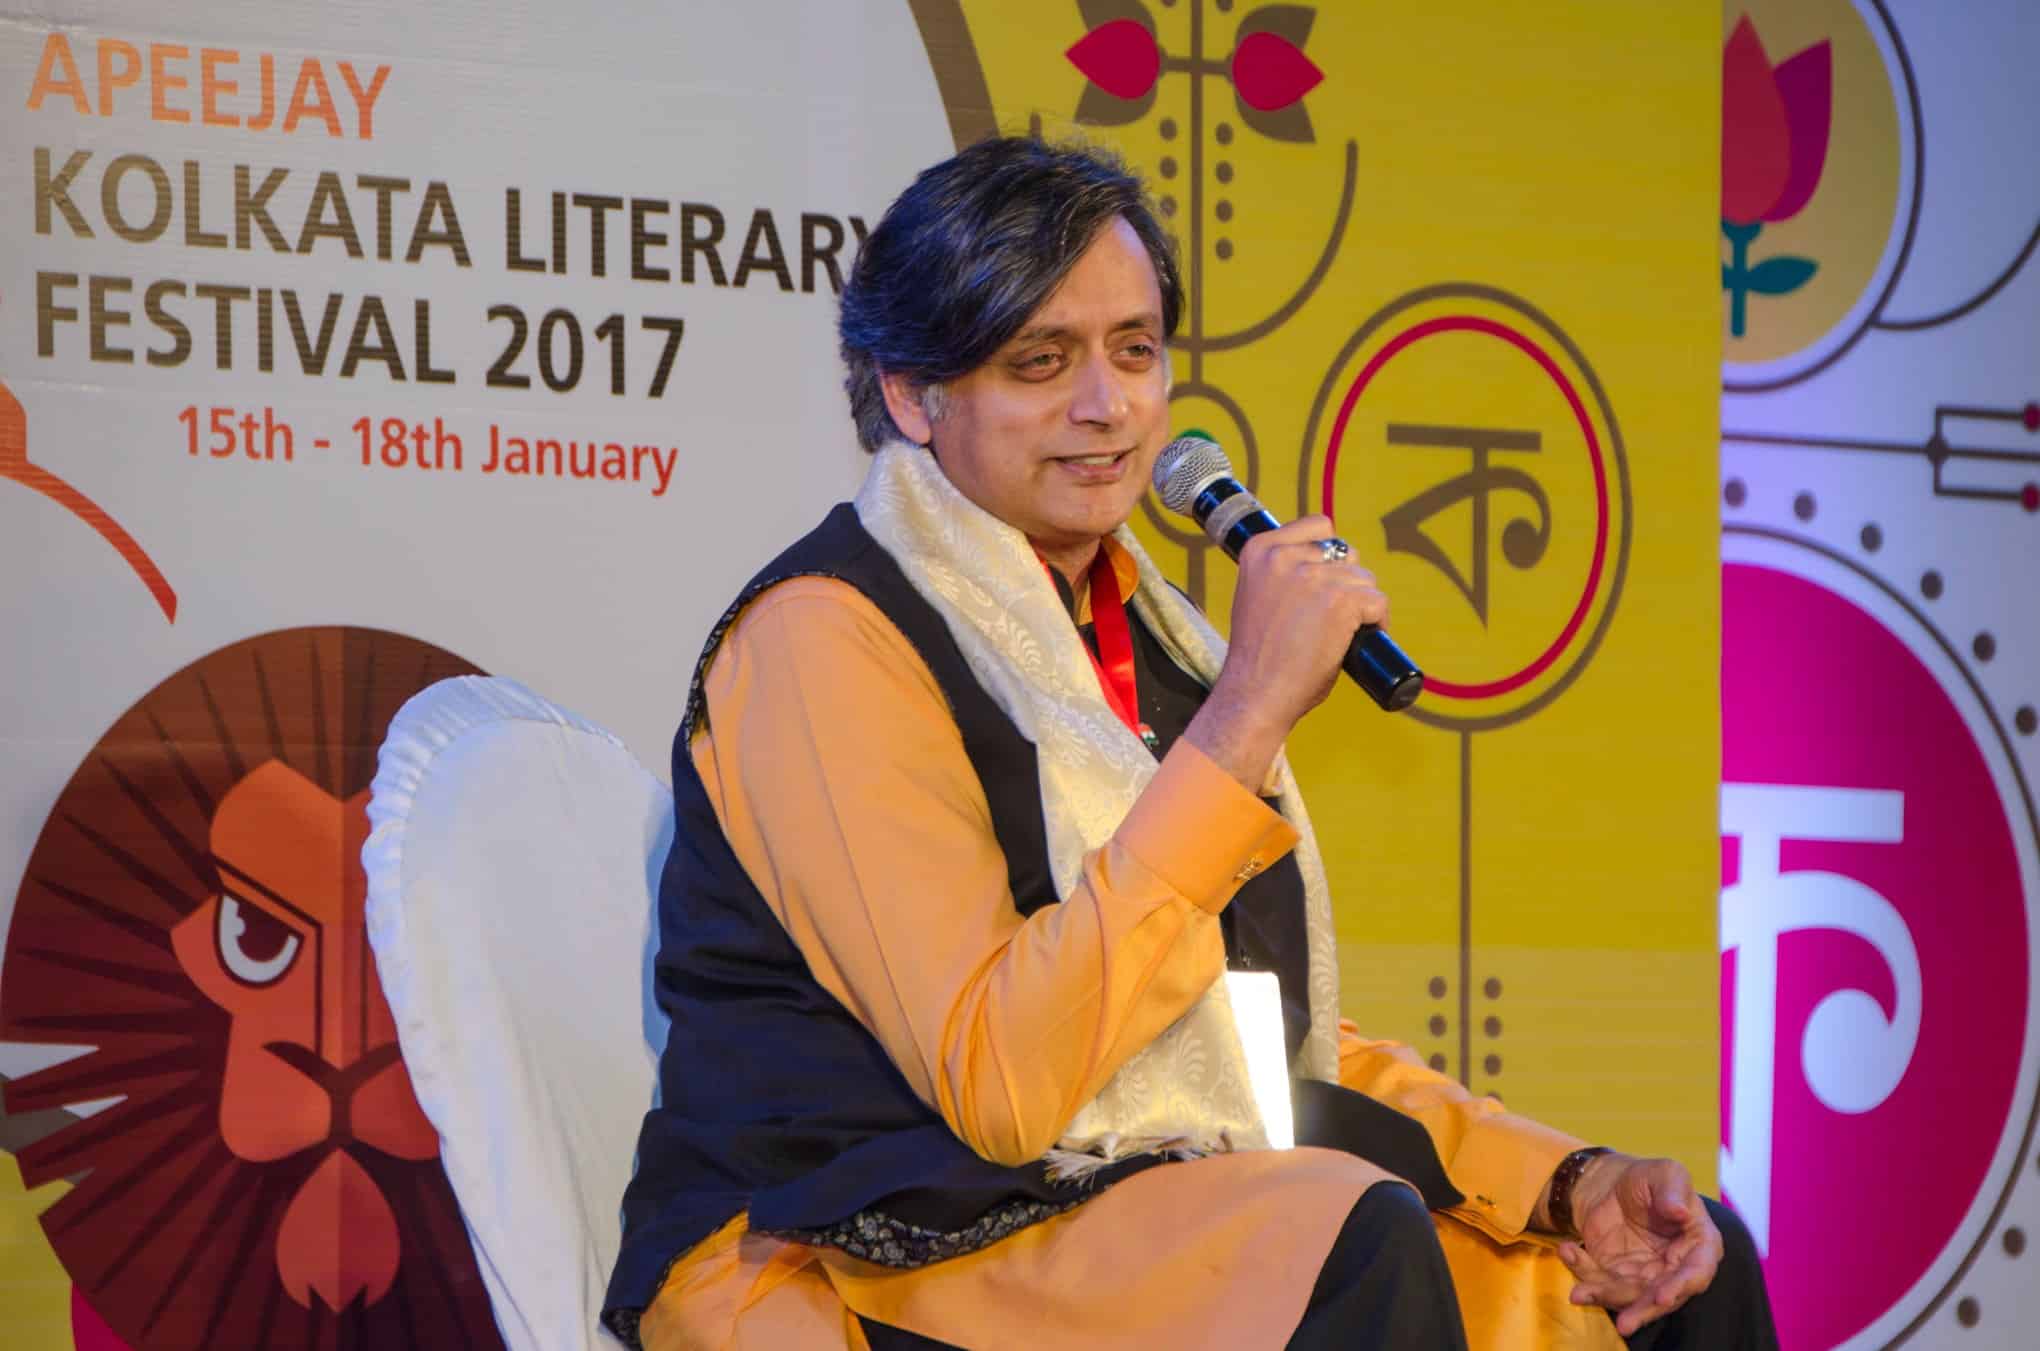 Apeejay કોલકાતા લિટરરી ફેસ્ટિવલ 2017માં ભારતીય રાજકારણી અને લેખક શશિ થરૂર. ફોટો: Oxford Bookstore